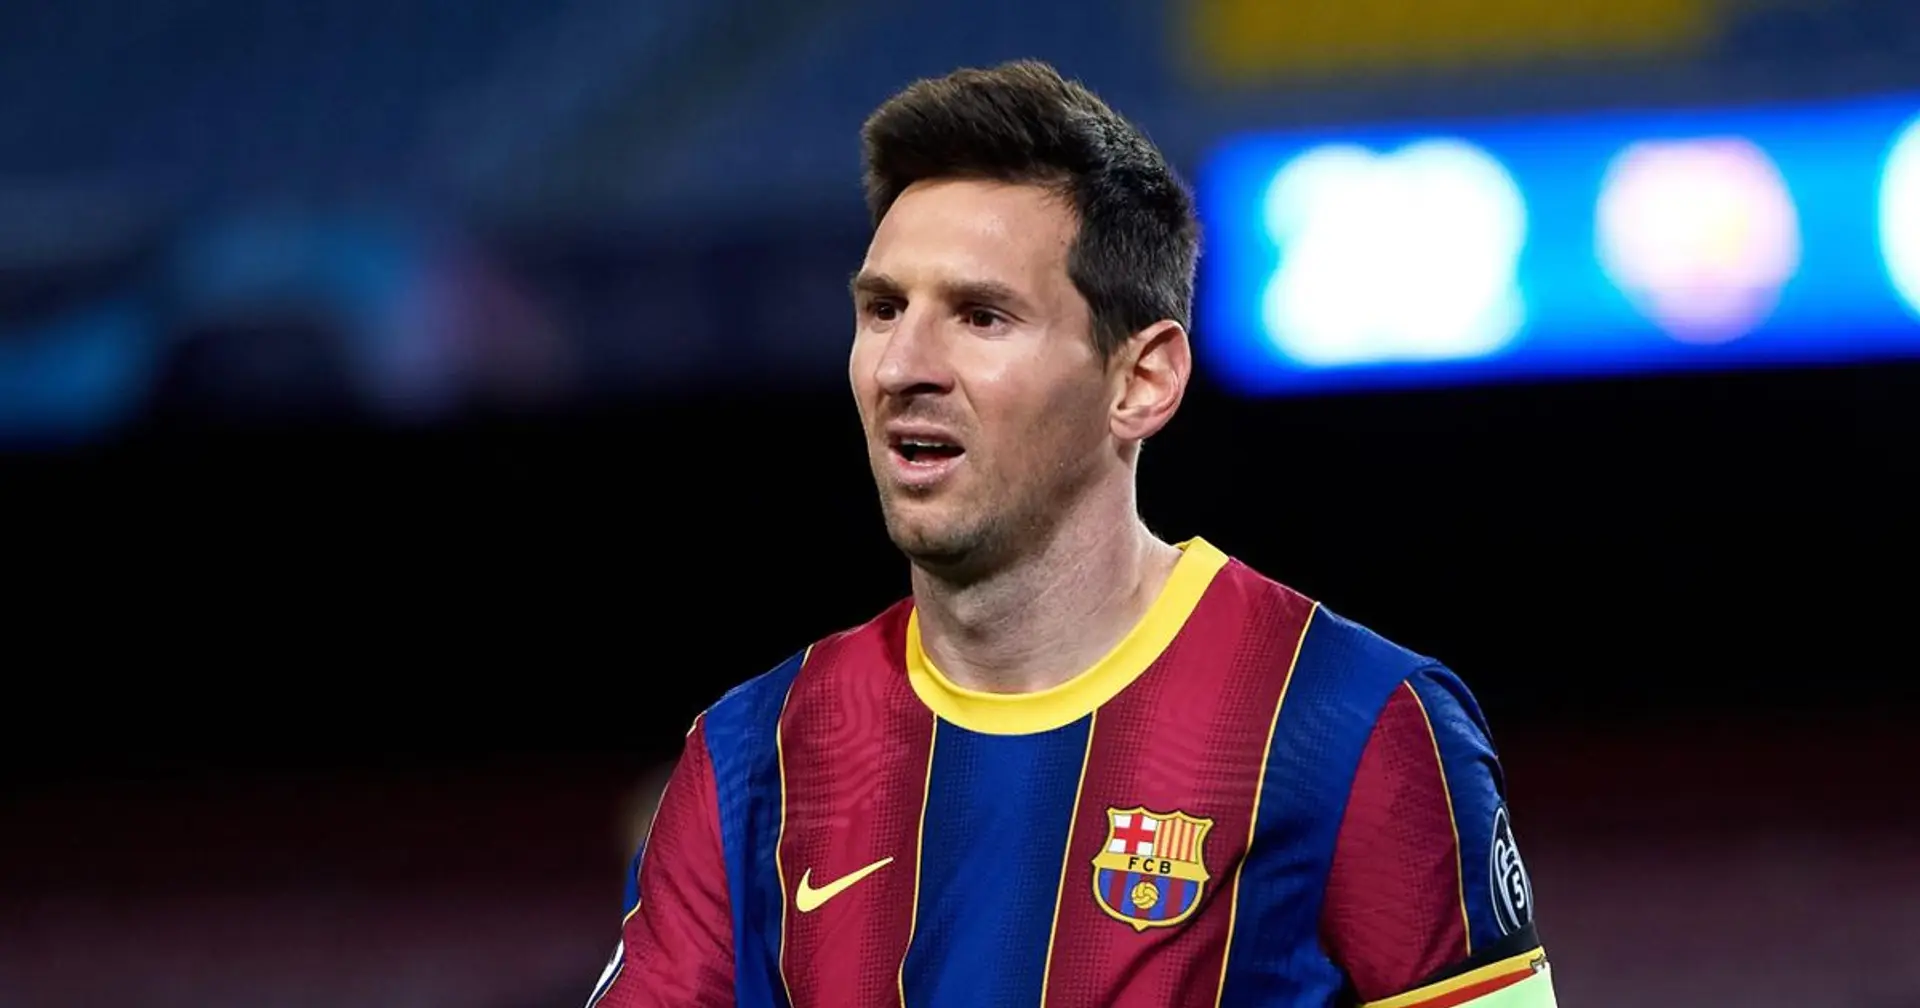 'S**t': Messi's hilarious reaction to Man City stadium revealed